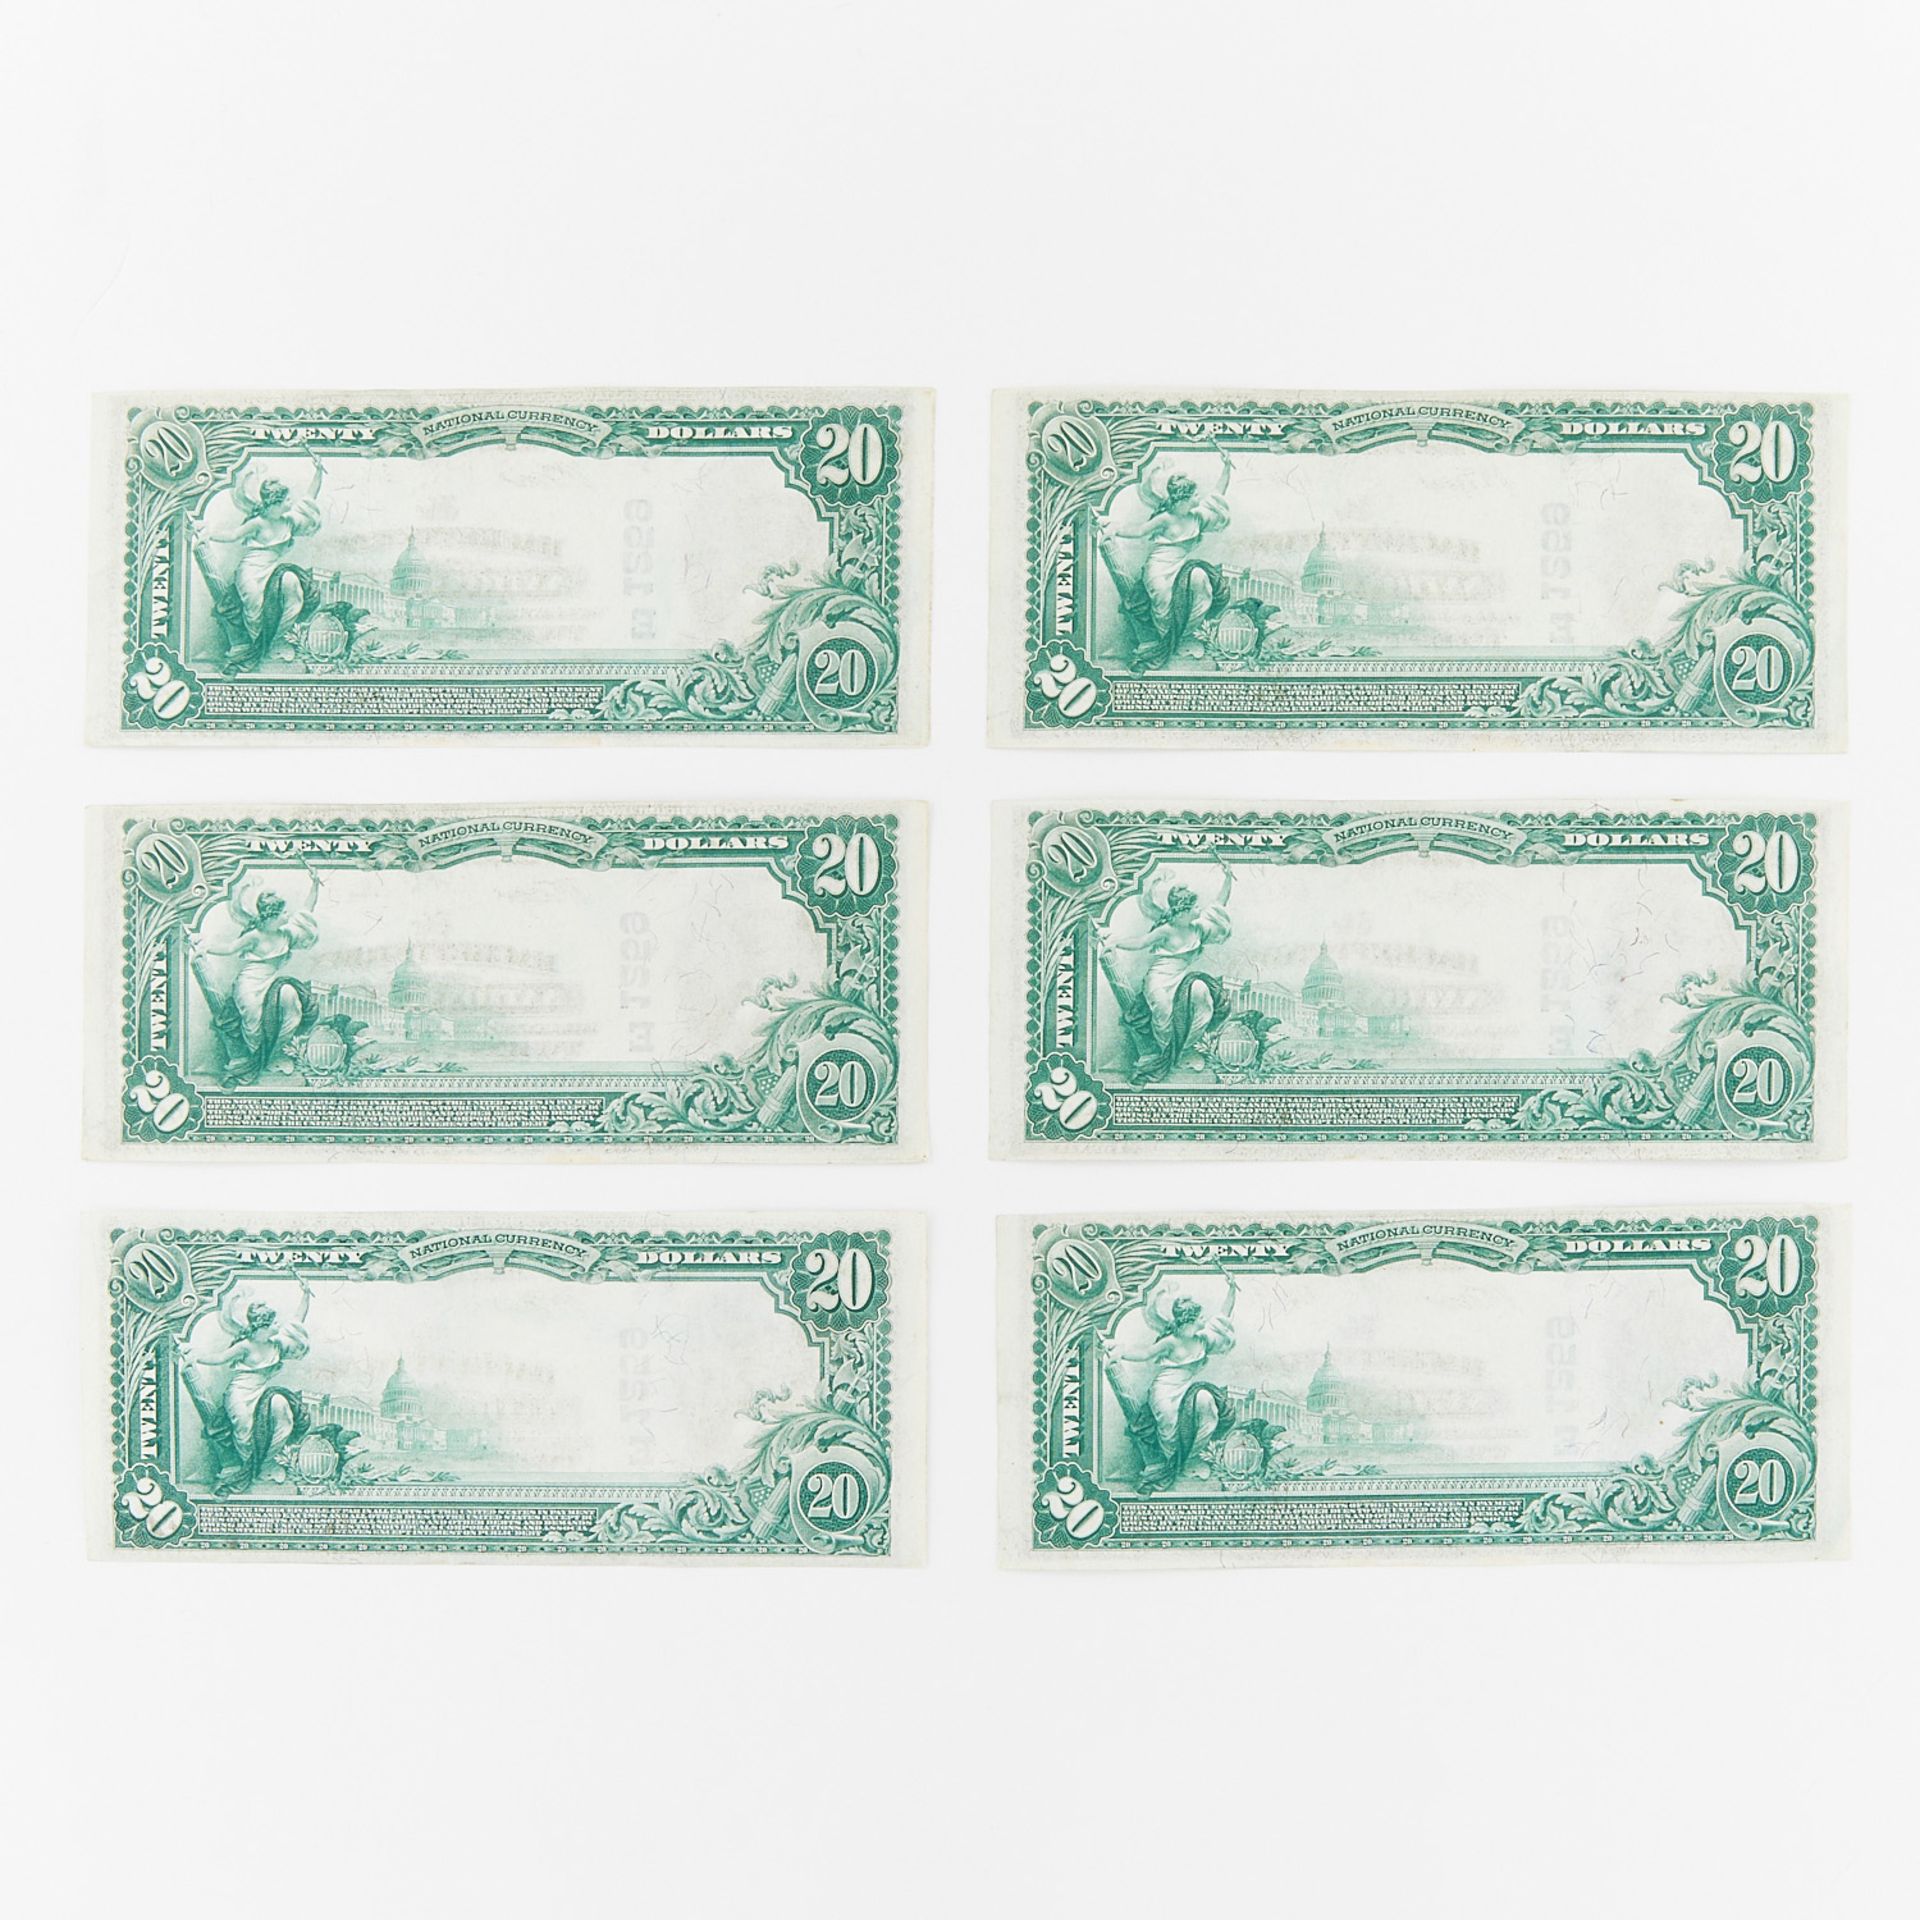 6 1902 $20 Bills Blue Seal Hackettstown Bank - Image 2 of 2